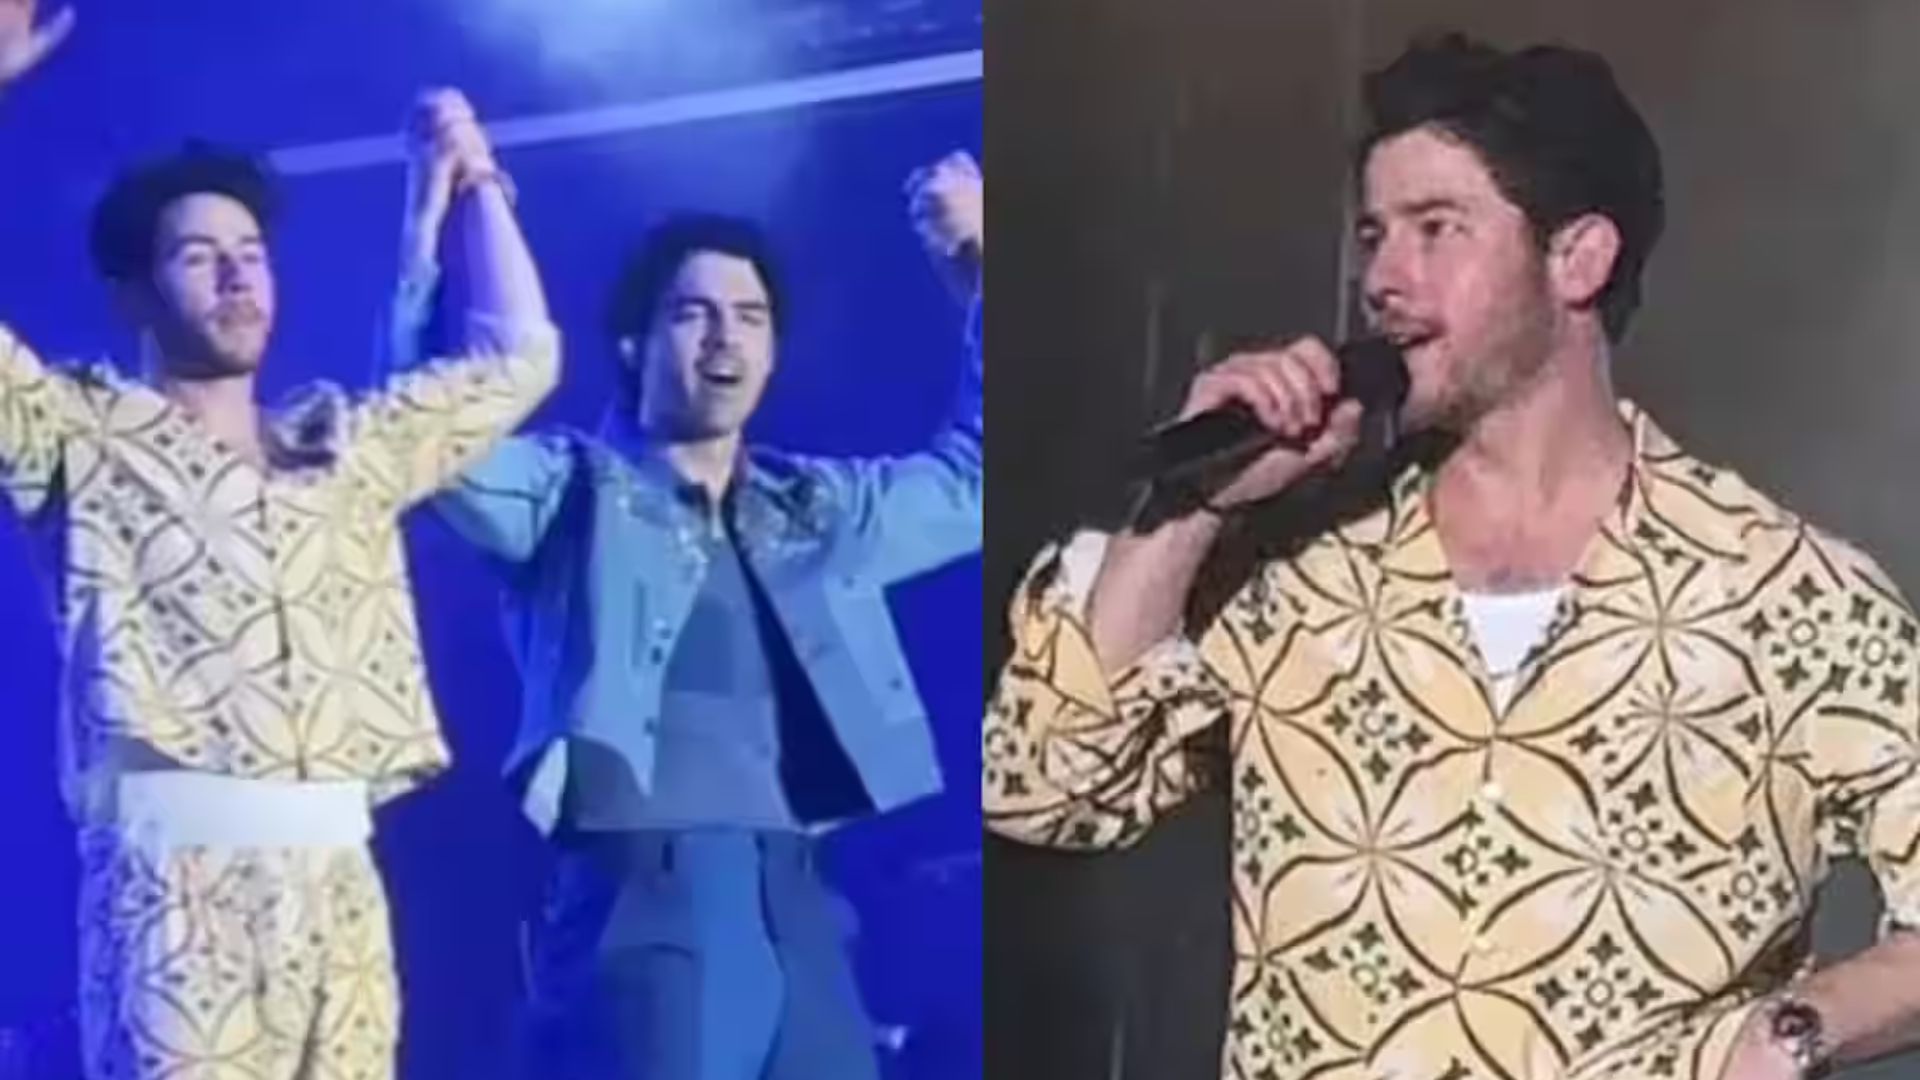 Nick Jonas gets energetic welcome at Lollapalooza India as audience enthusiastically shouts ‘jiju-jiju’